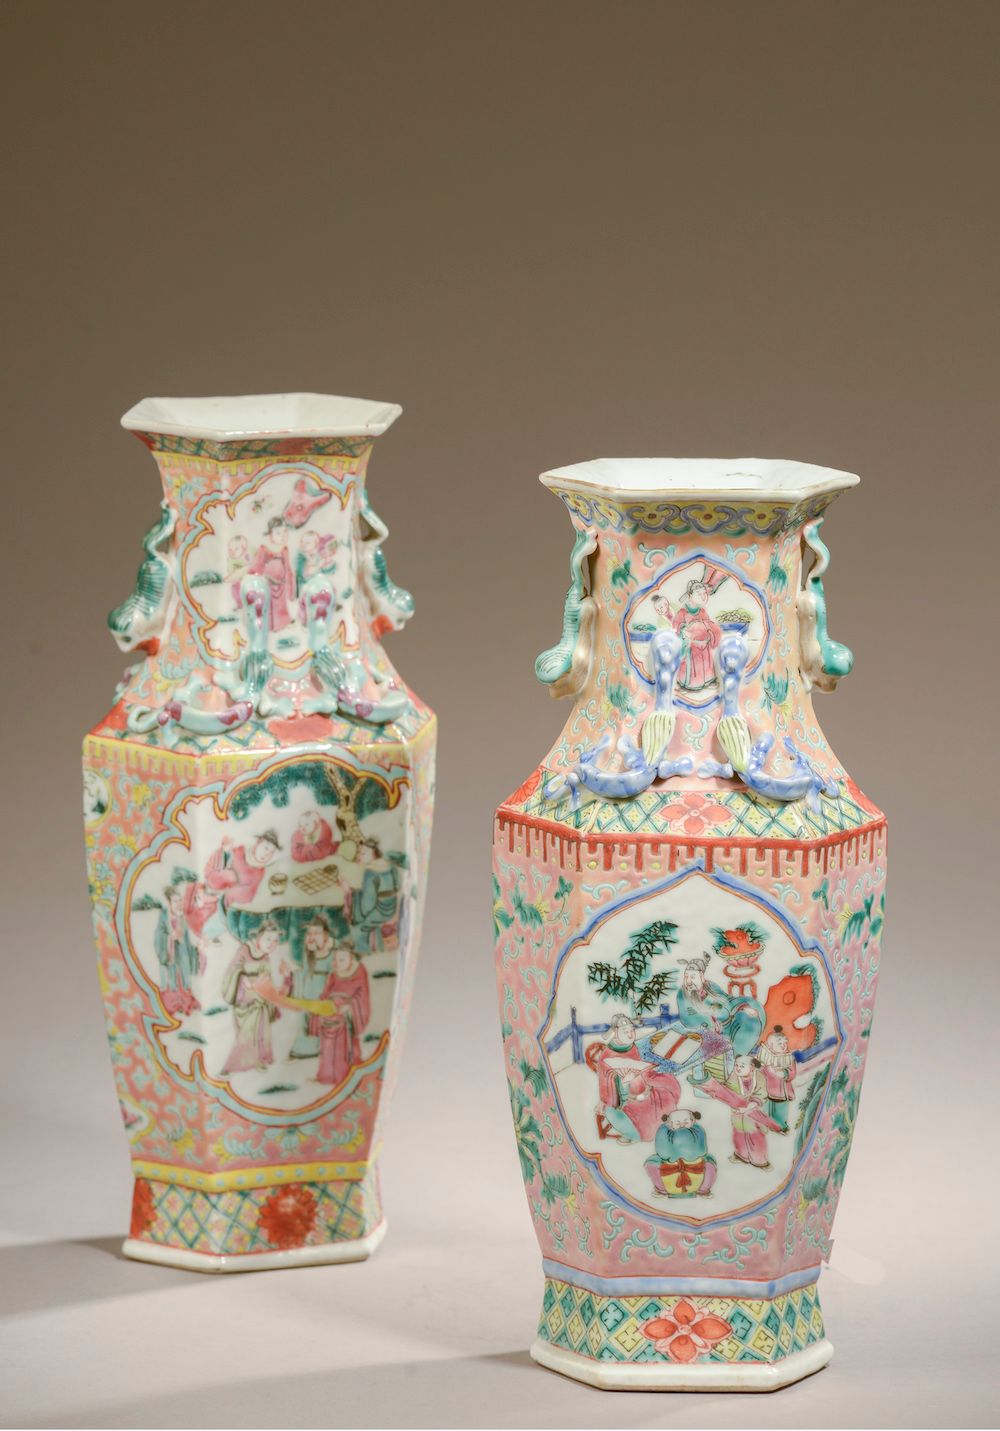 Null CHINA, Kanton - 19. Jahrhundert.

Zwei sechseckige balusterförmige Vasen au&hellip;